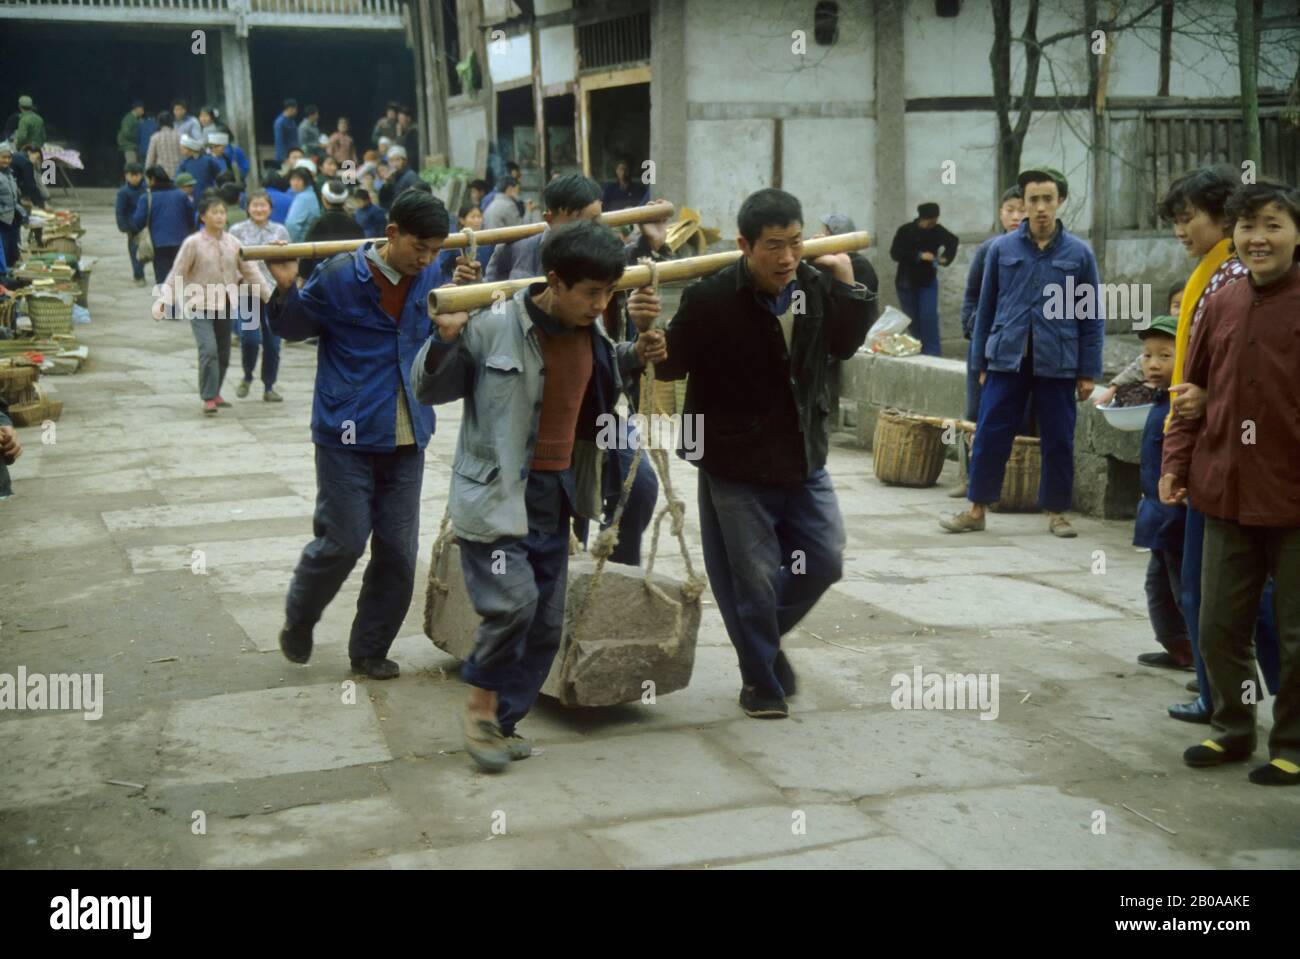 CHINA, DAZU, MEN TRANSPORTING A HEAVY STONE WITH BAMBOO POLES Stock Photo